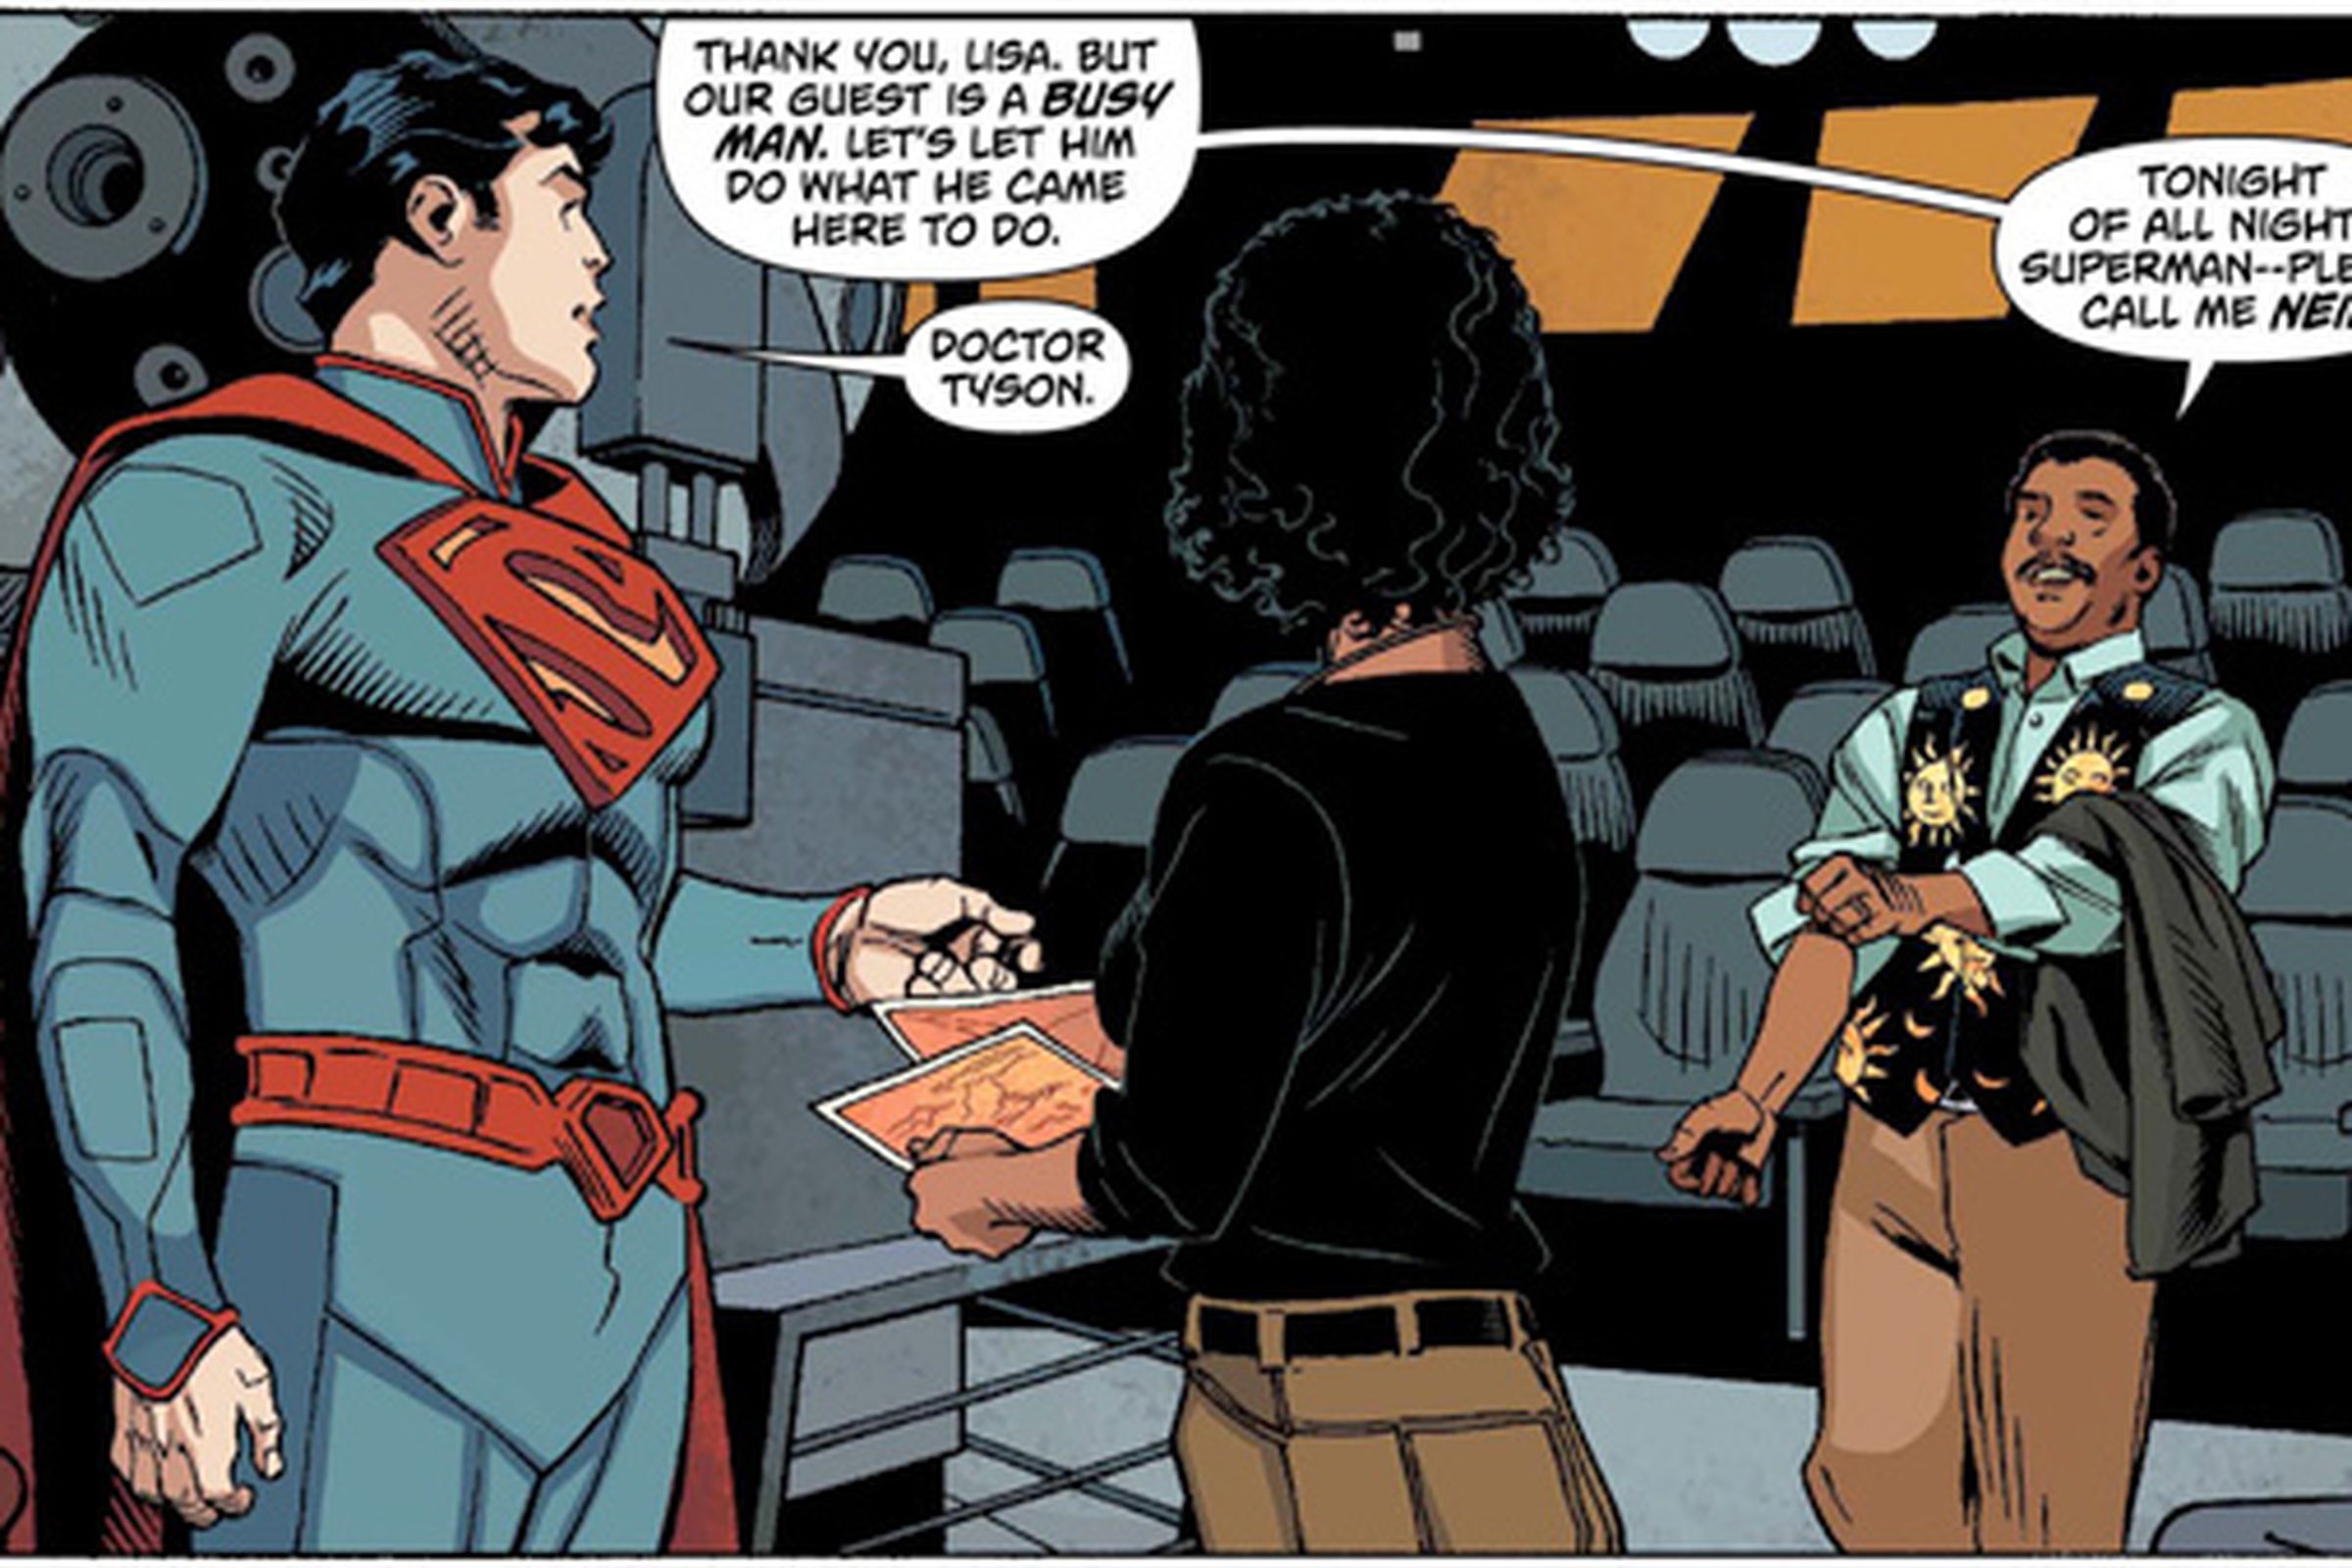 Neil Degrasse tyson superman DC COMICS